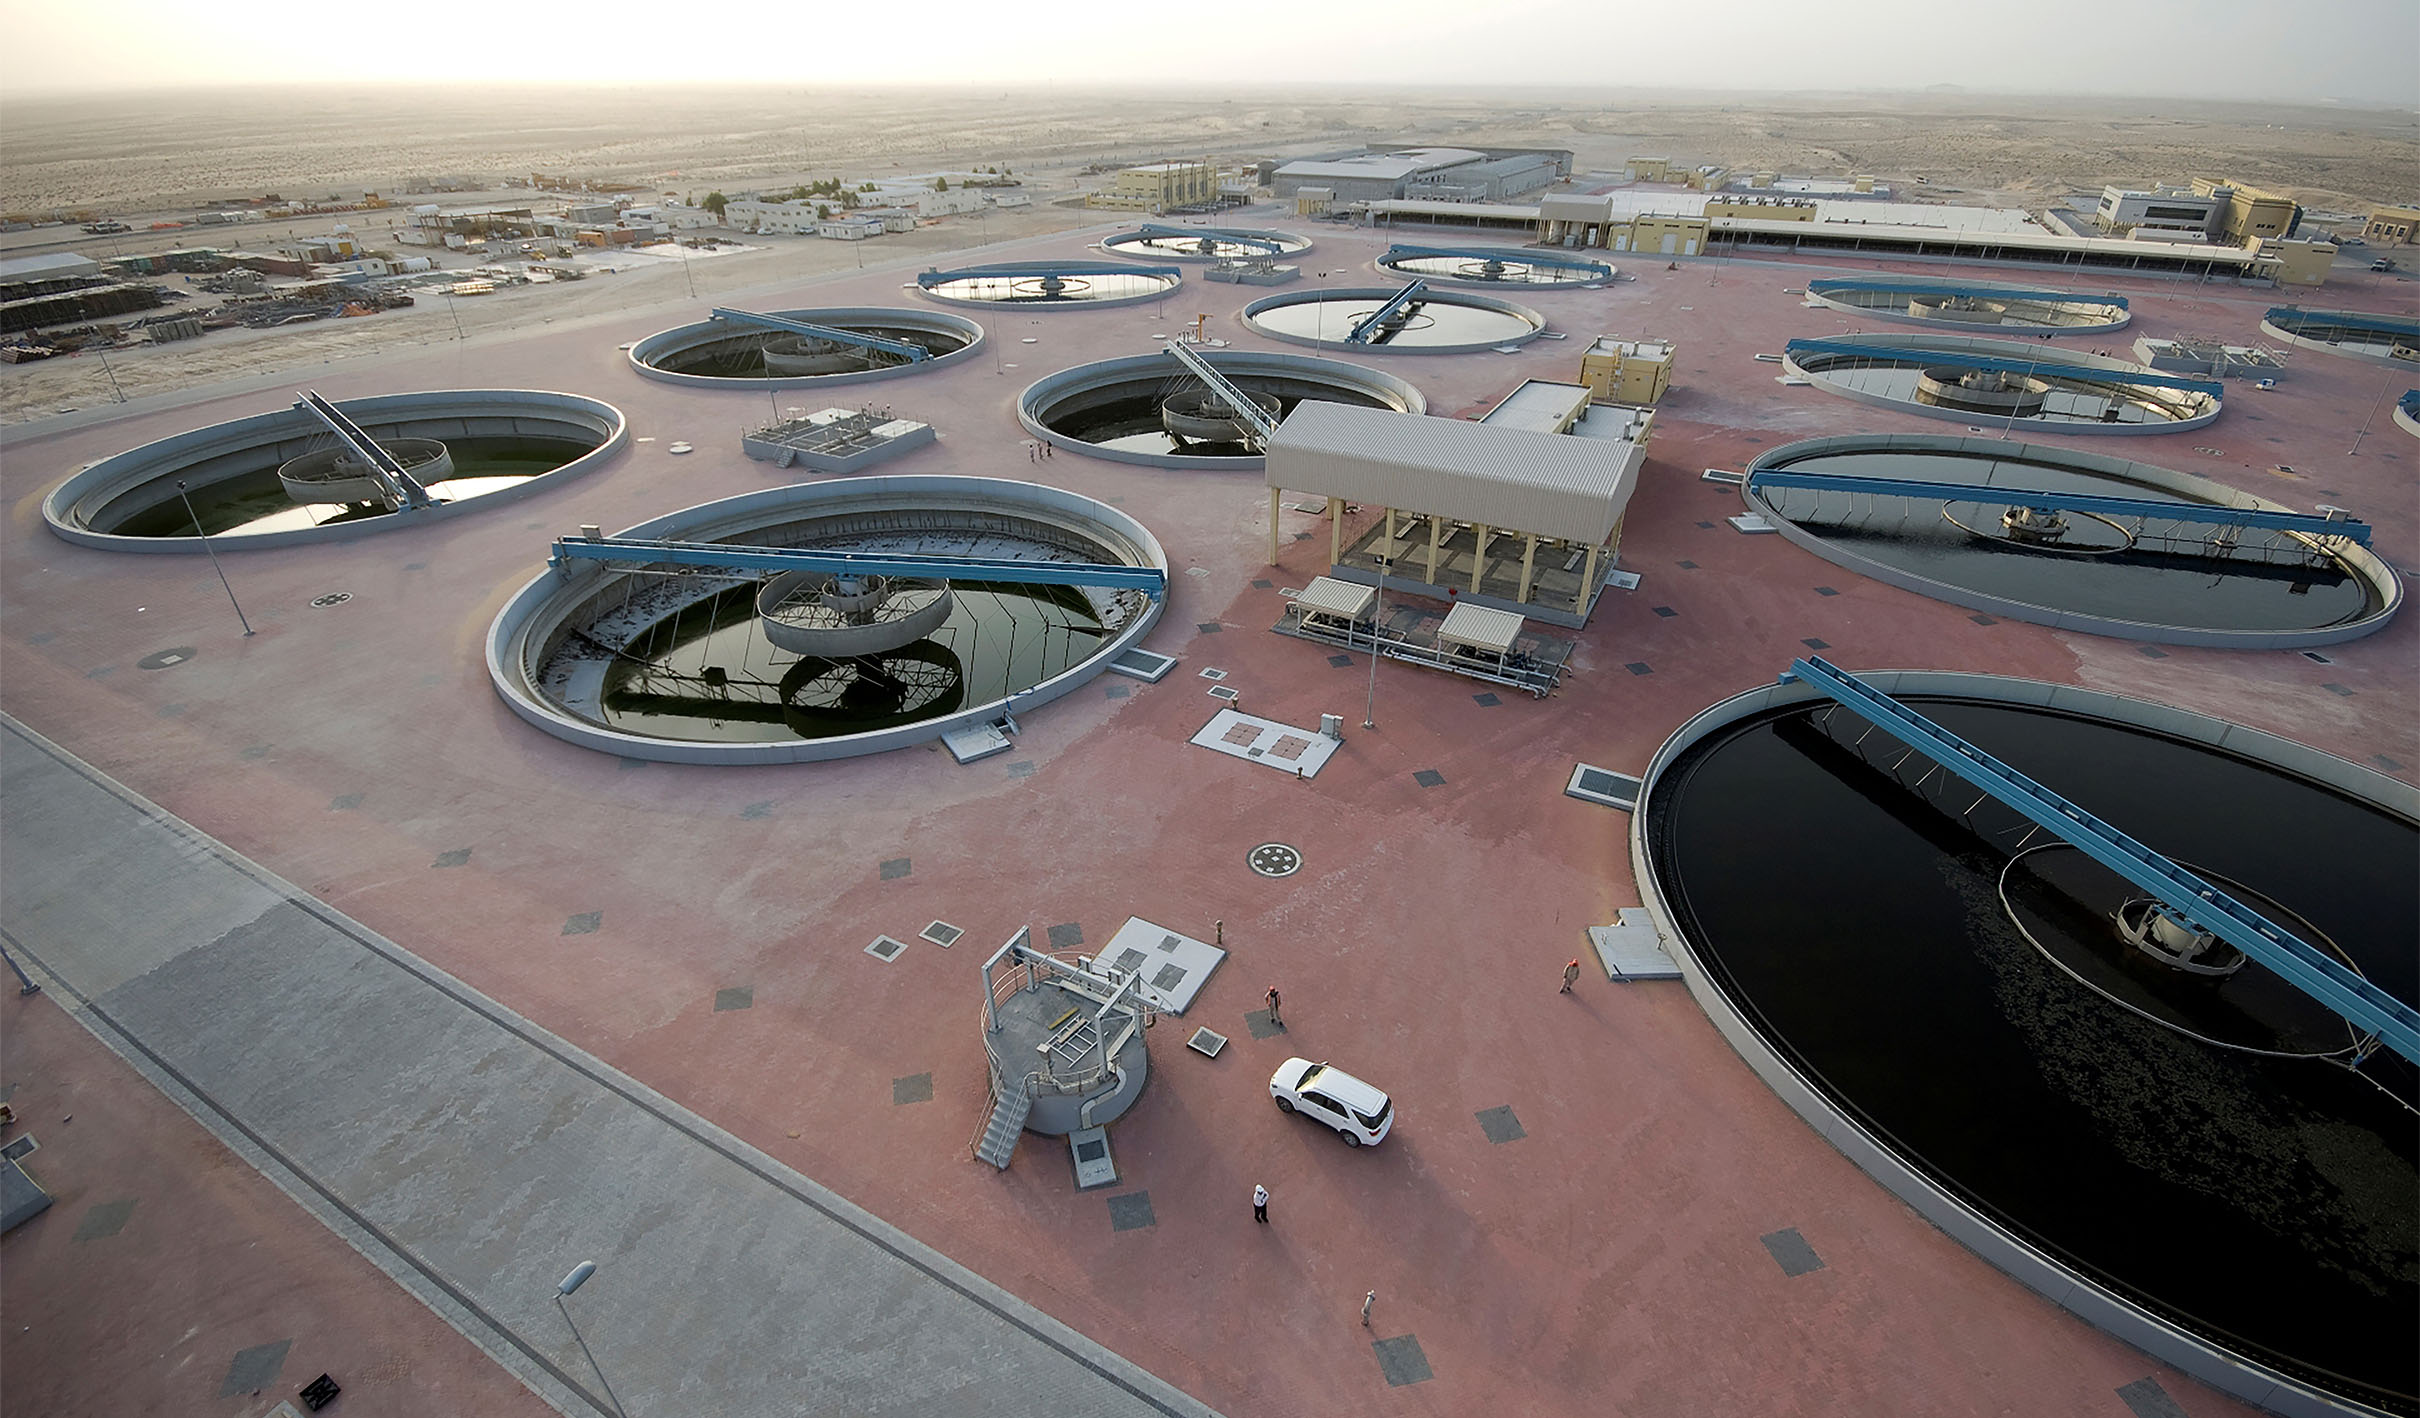 Jebel Ali Sewage Treatment Plant